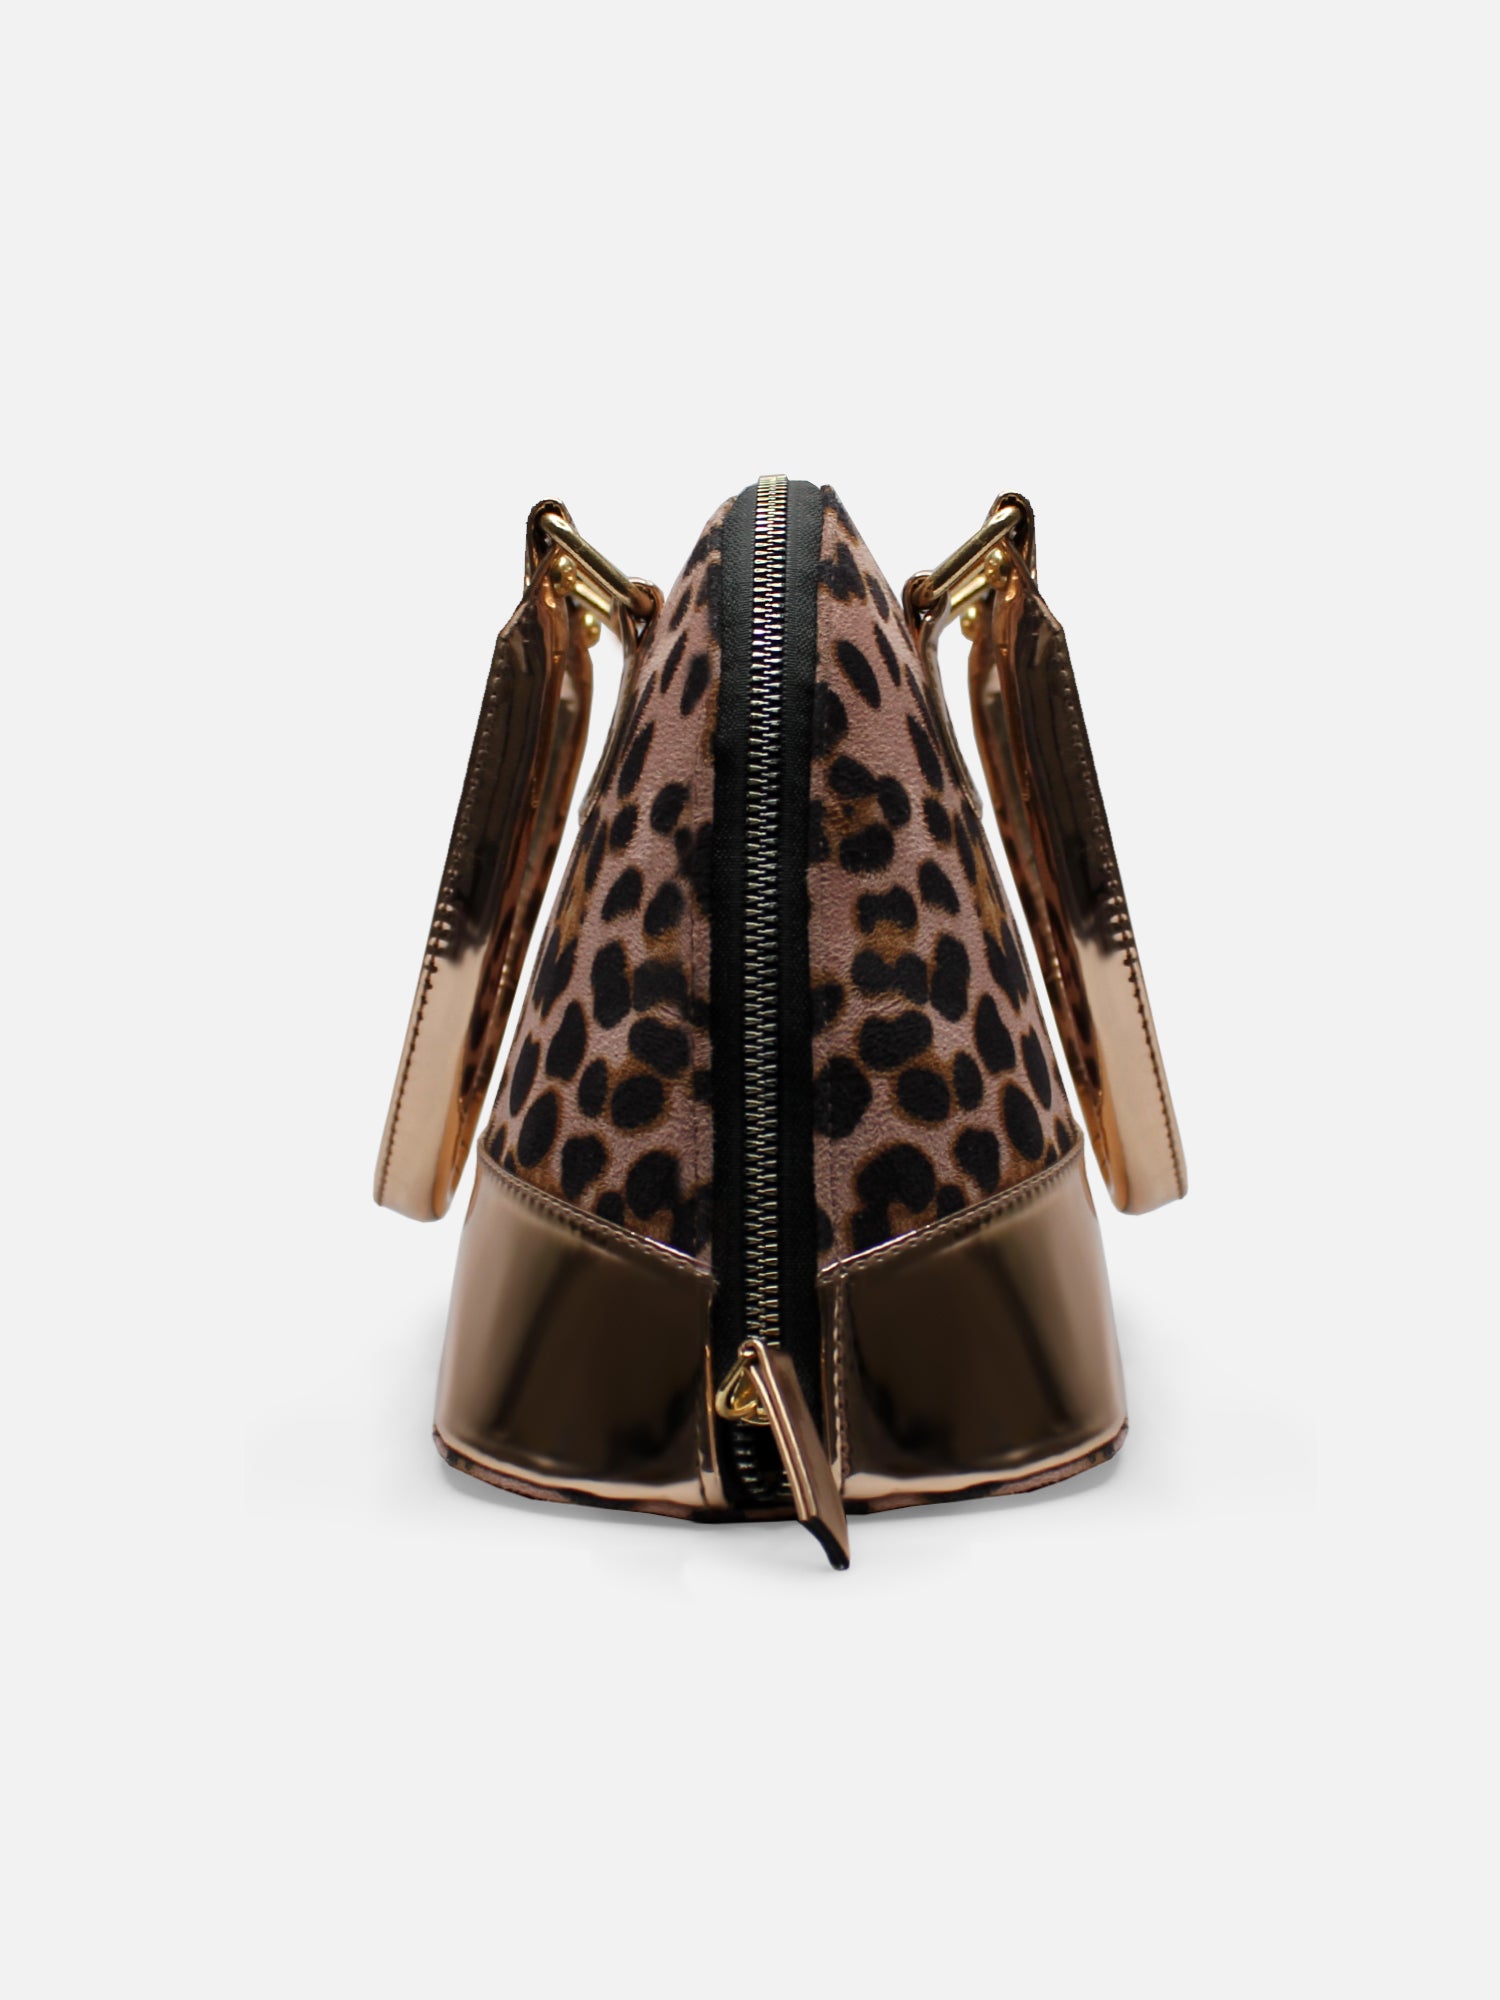 Woman's leopard print purs… | Clothing and Apparel | ksl.com